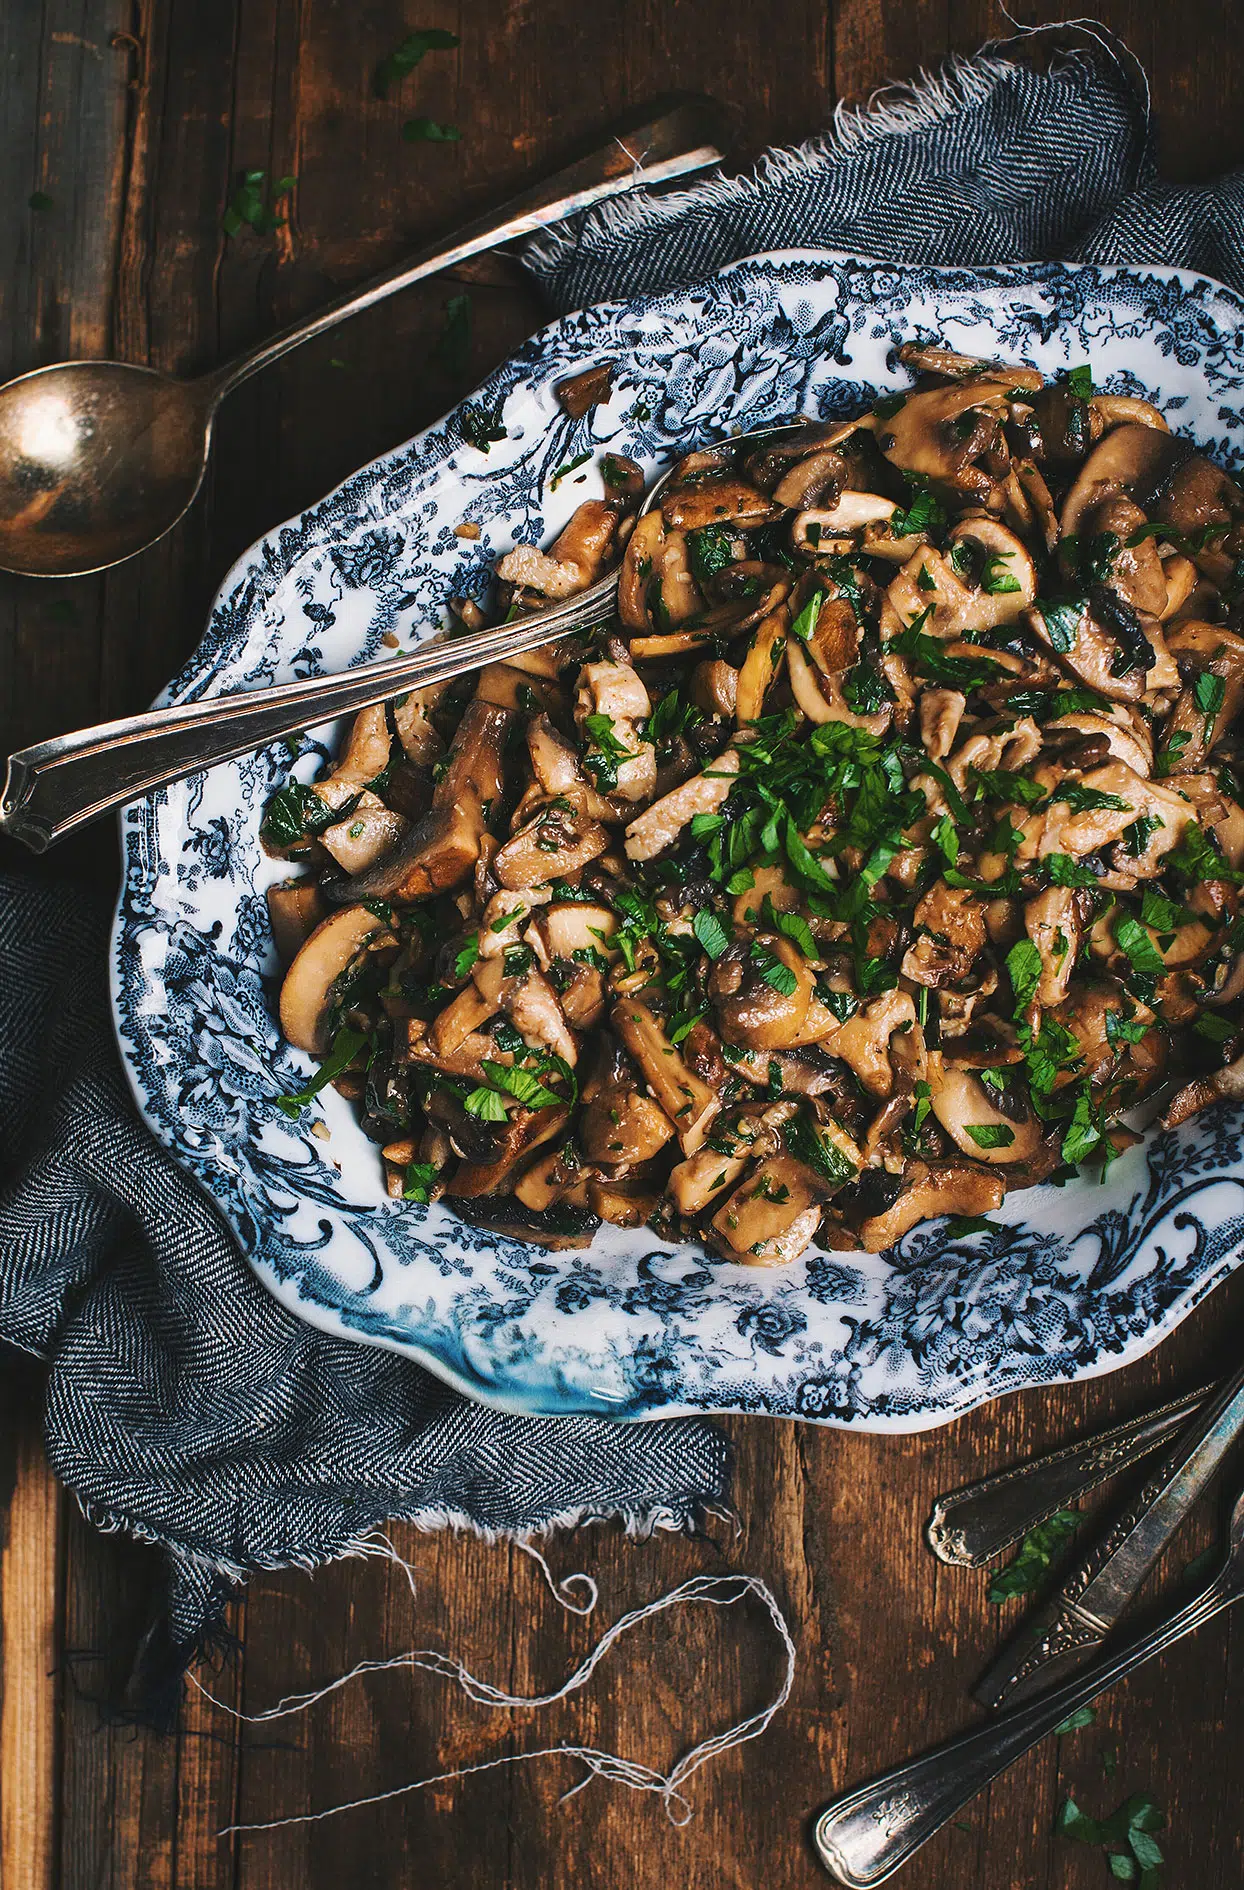 Sautéed mushrooms in garlic butter and fresh herbs